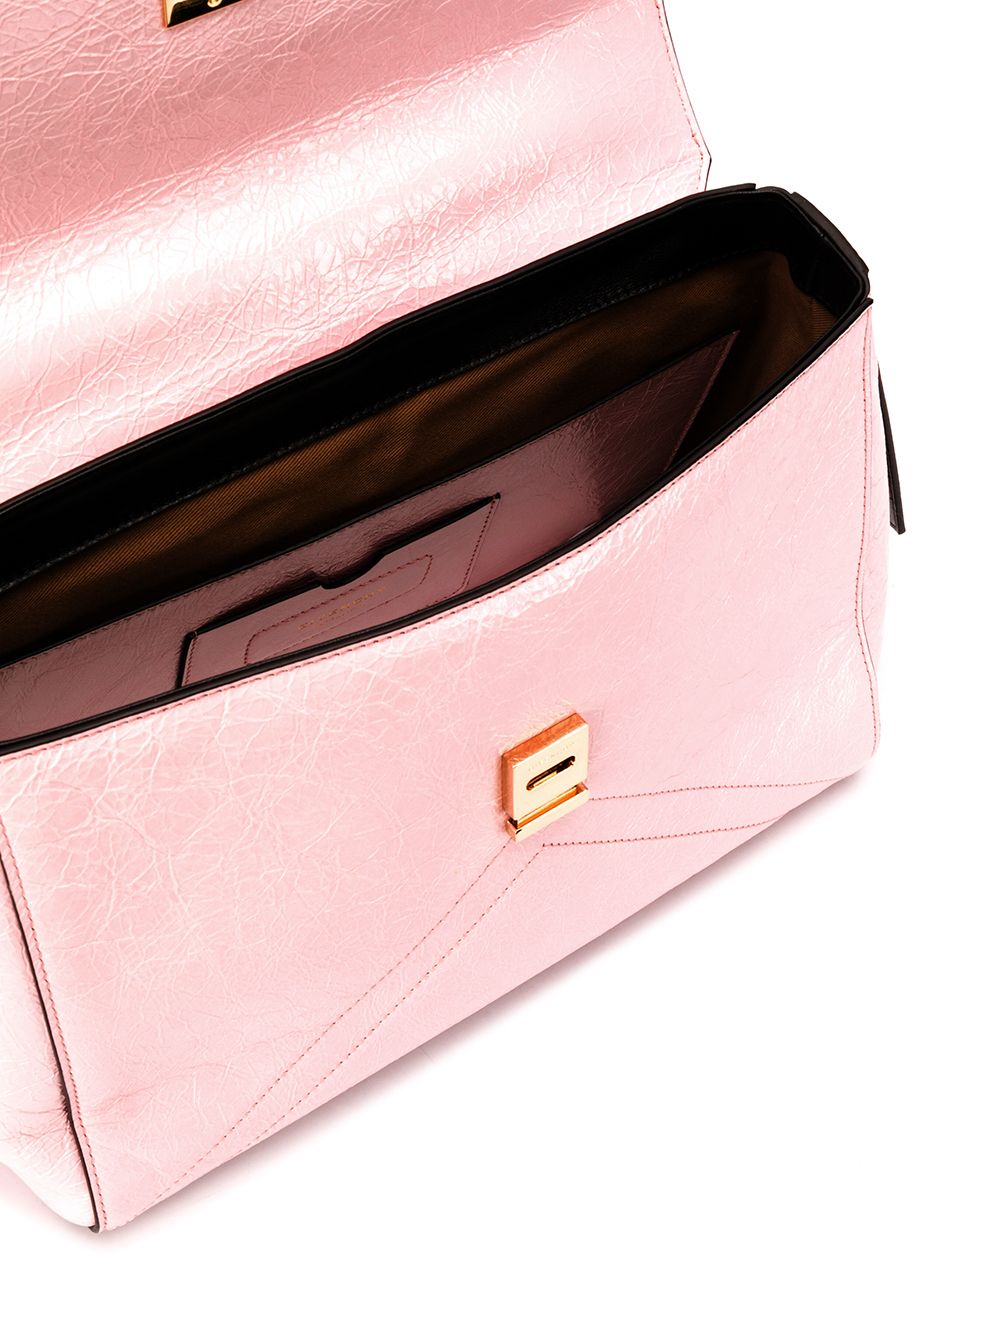 фото Givenchy сумка на плечо id среднего размера